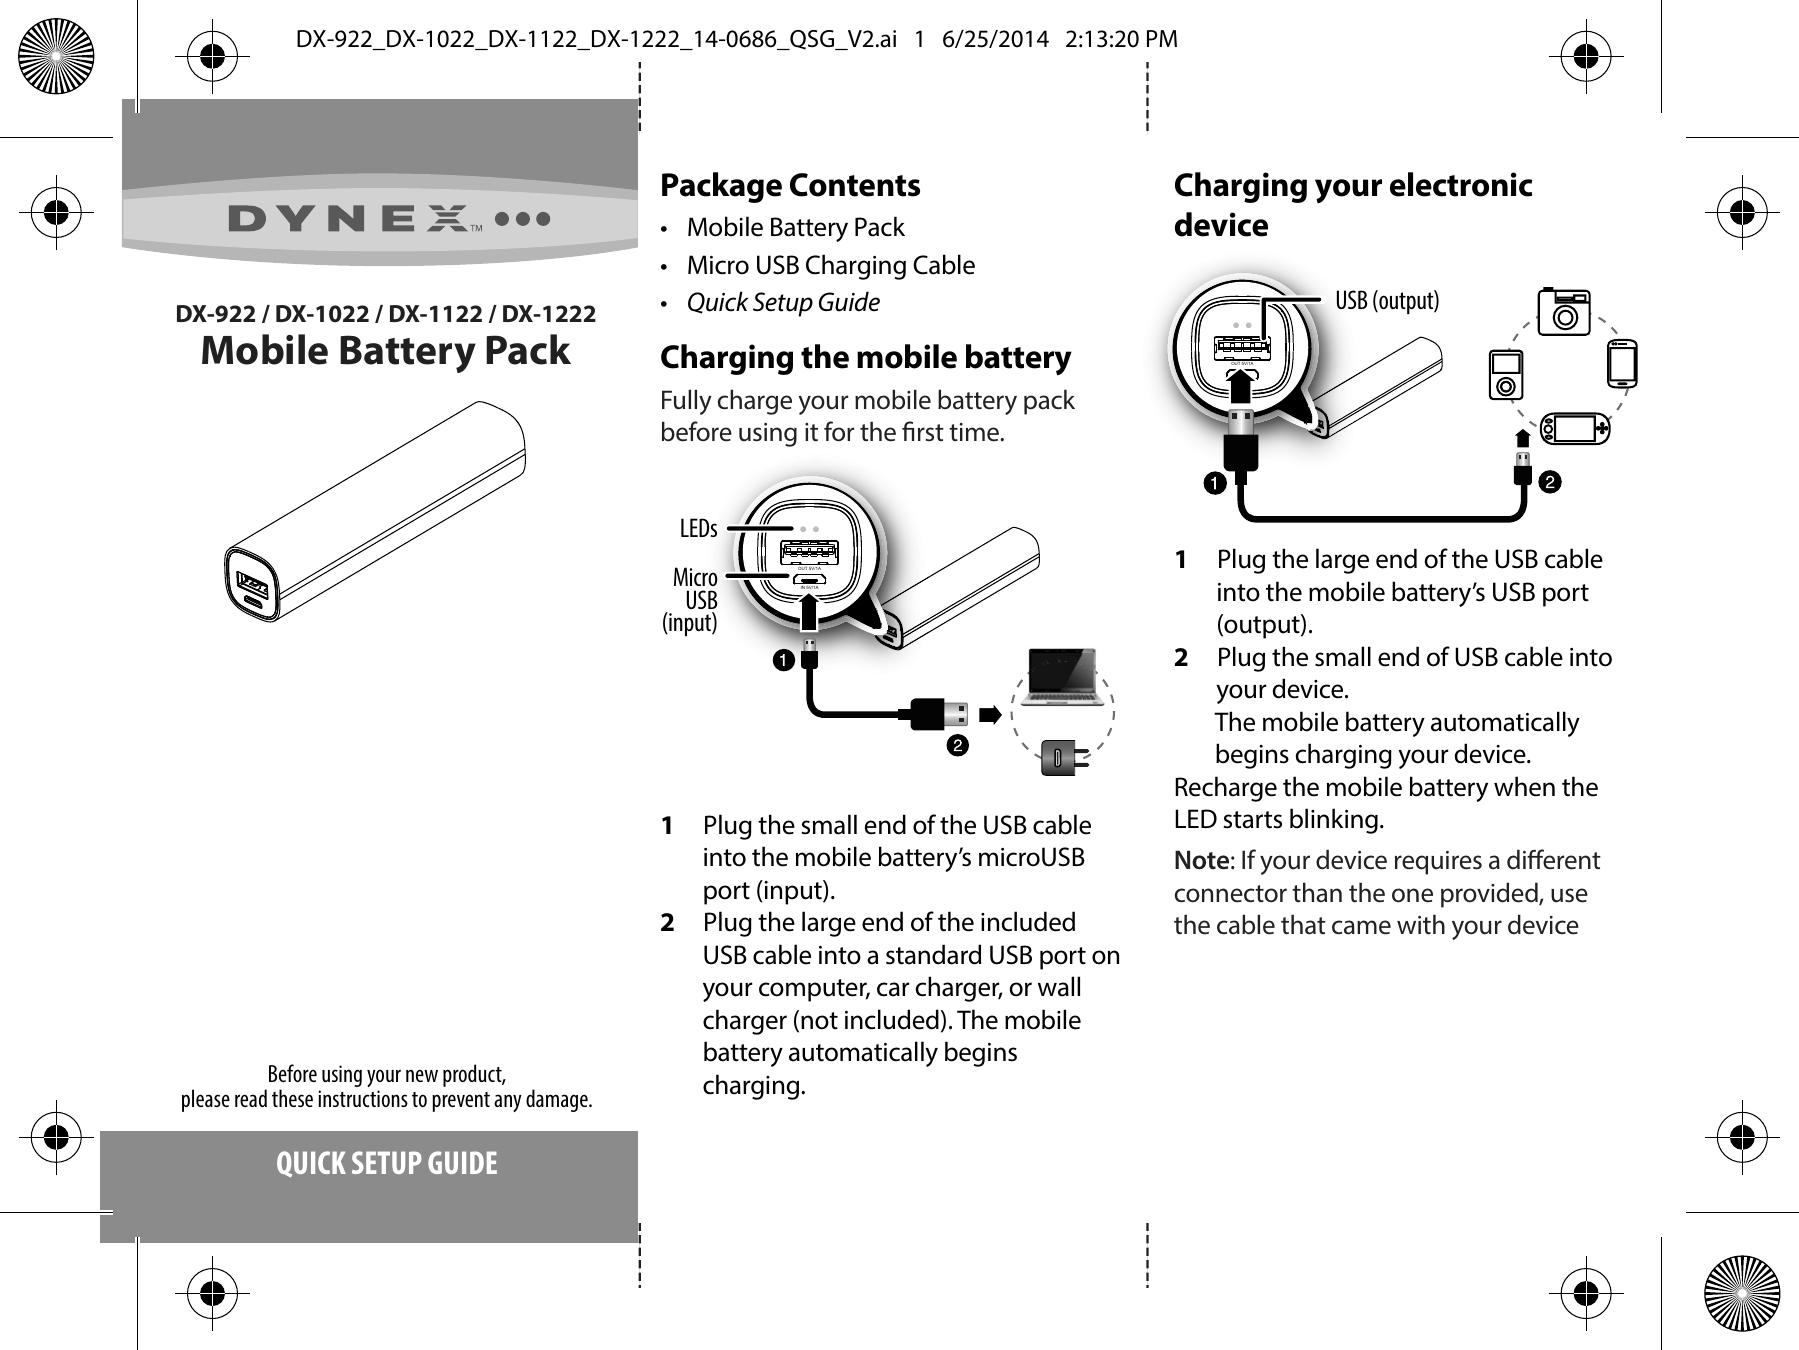 Dynex DX-1122 Marine Battery User Manual